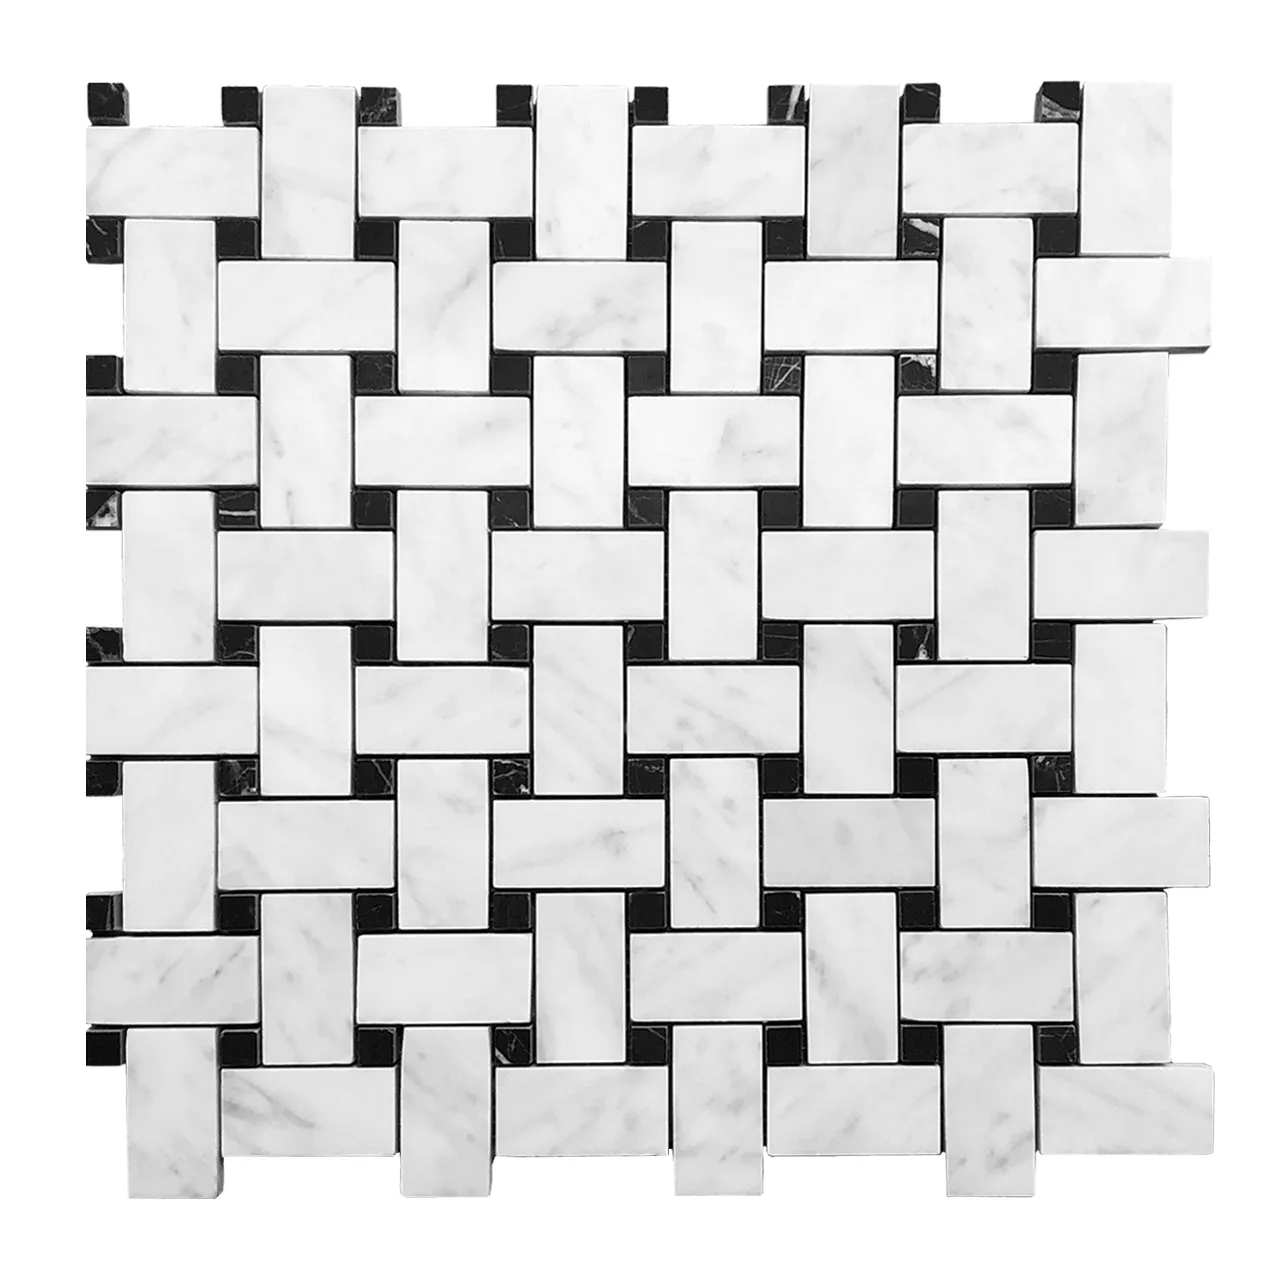 Carrara White Italian Marble Basketweave Mosaic Tile with Nero Marquina Black Dots Honed